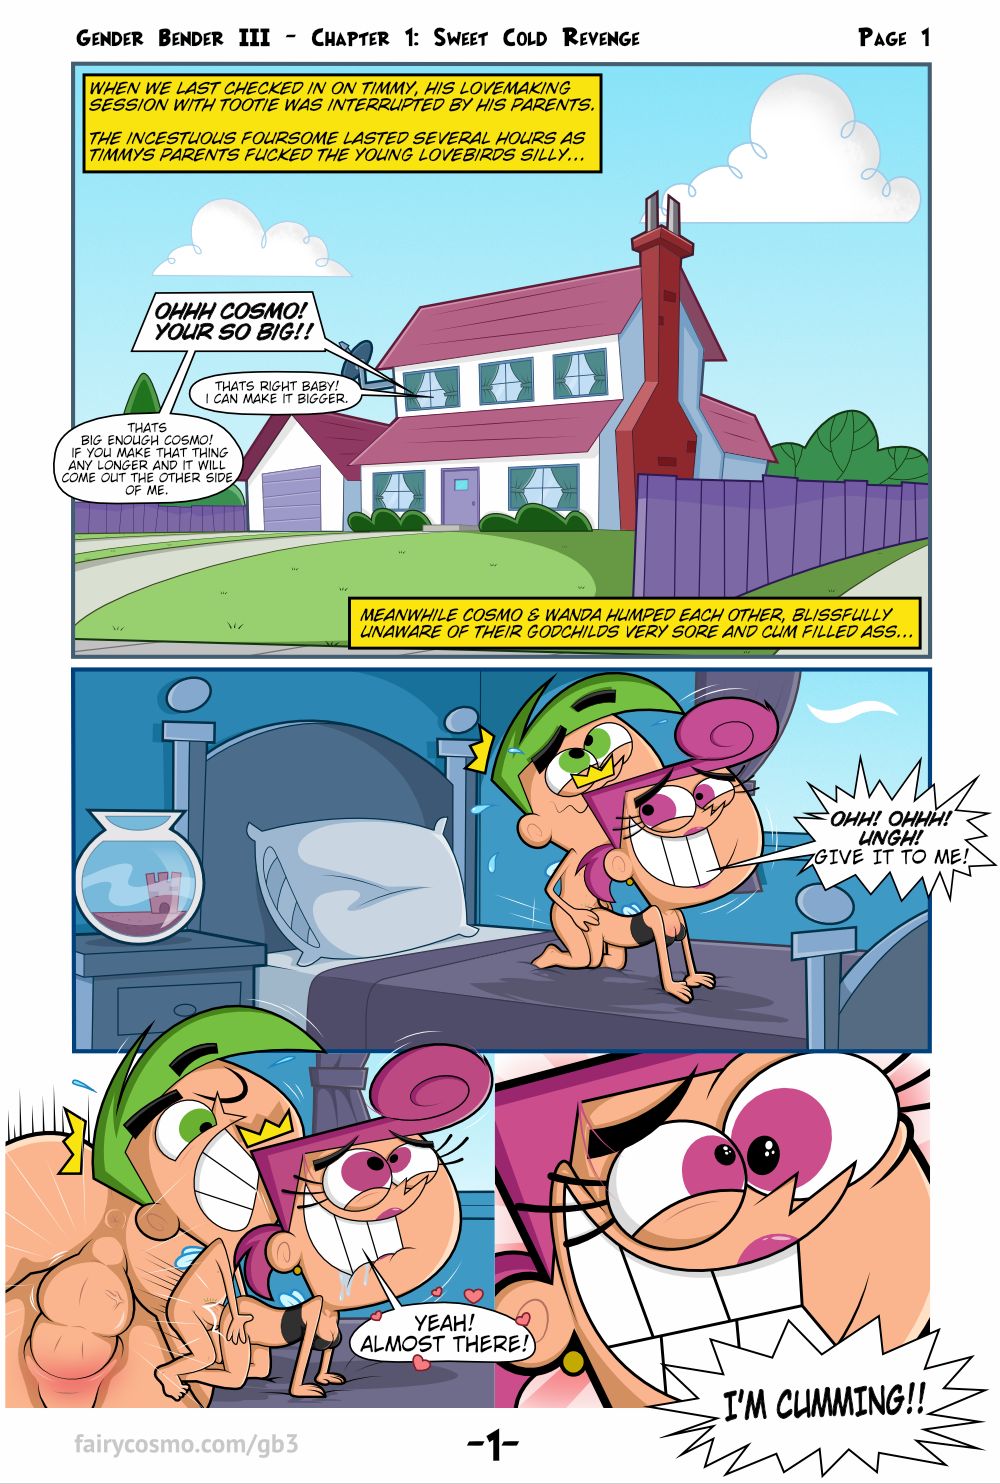 Gender Bender III (Fairly Odd Parents) by FairyCosmo - Porn Cartoon Comics